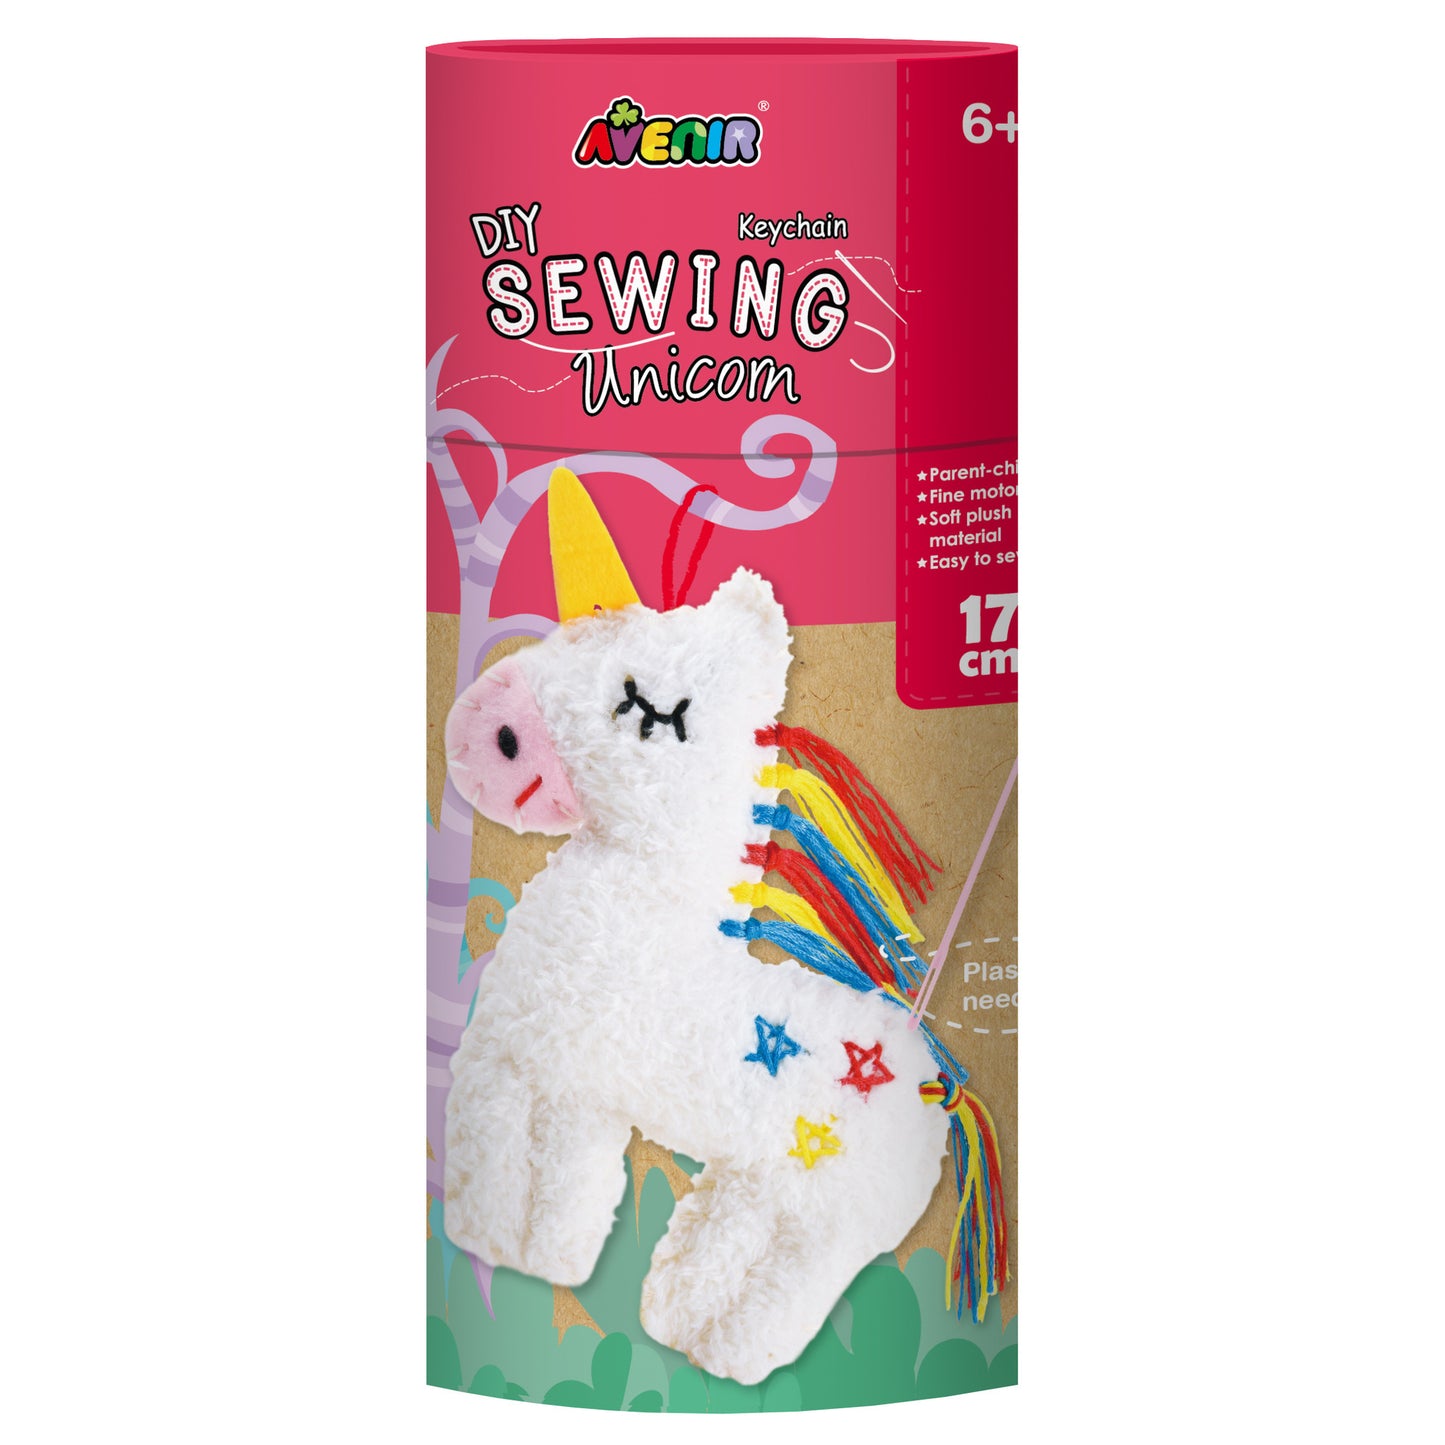 Sewing Keychain Unicorn